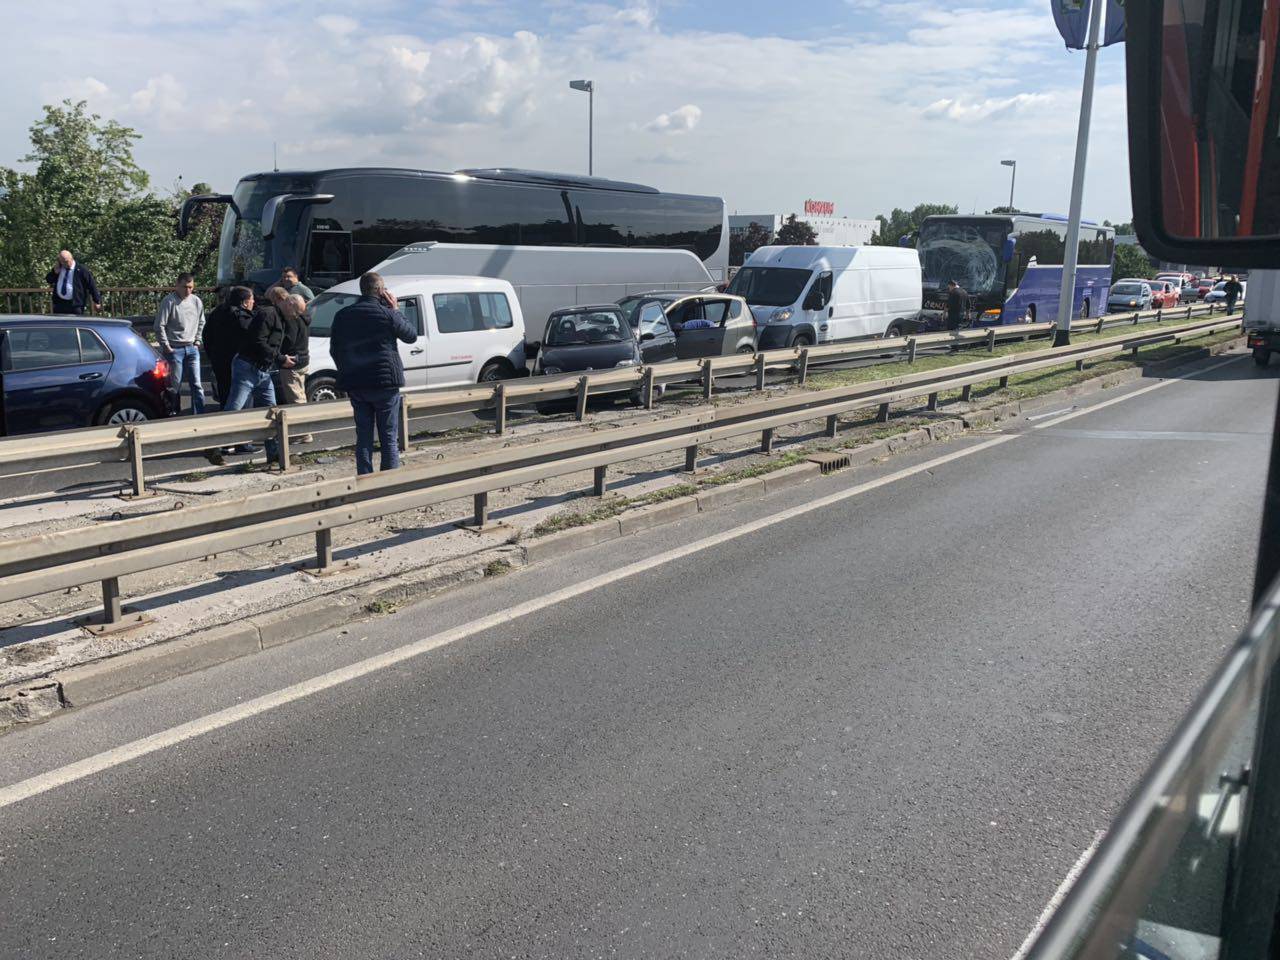 Kaos u Zagrebu: Bus udario u kombi i 'pomeo' još pet vozila